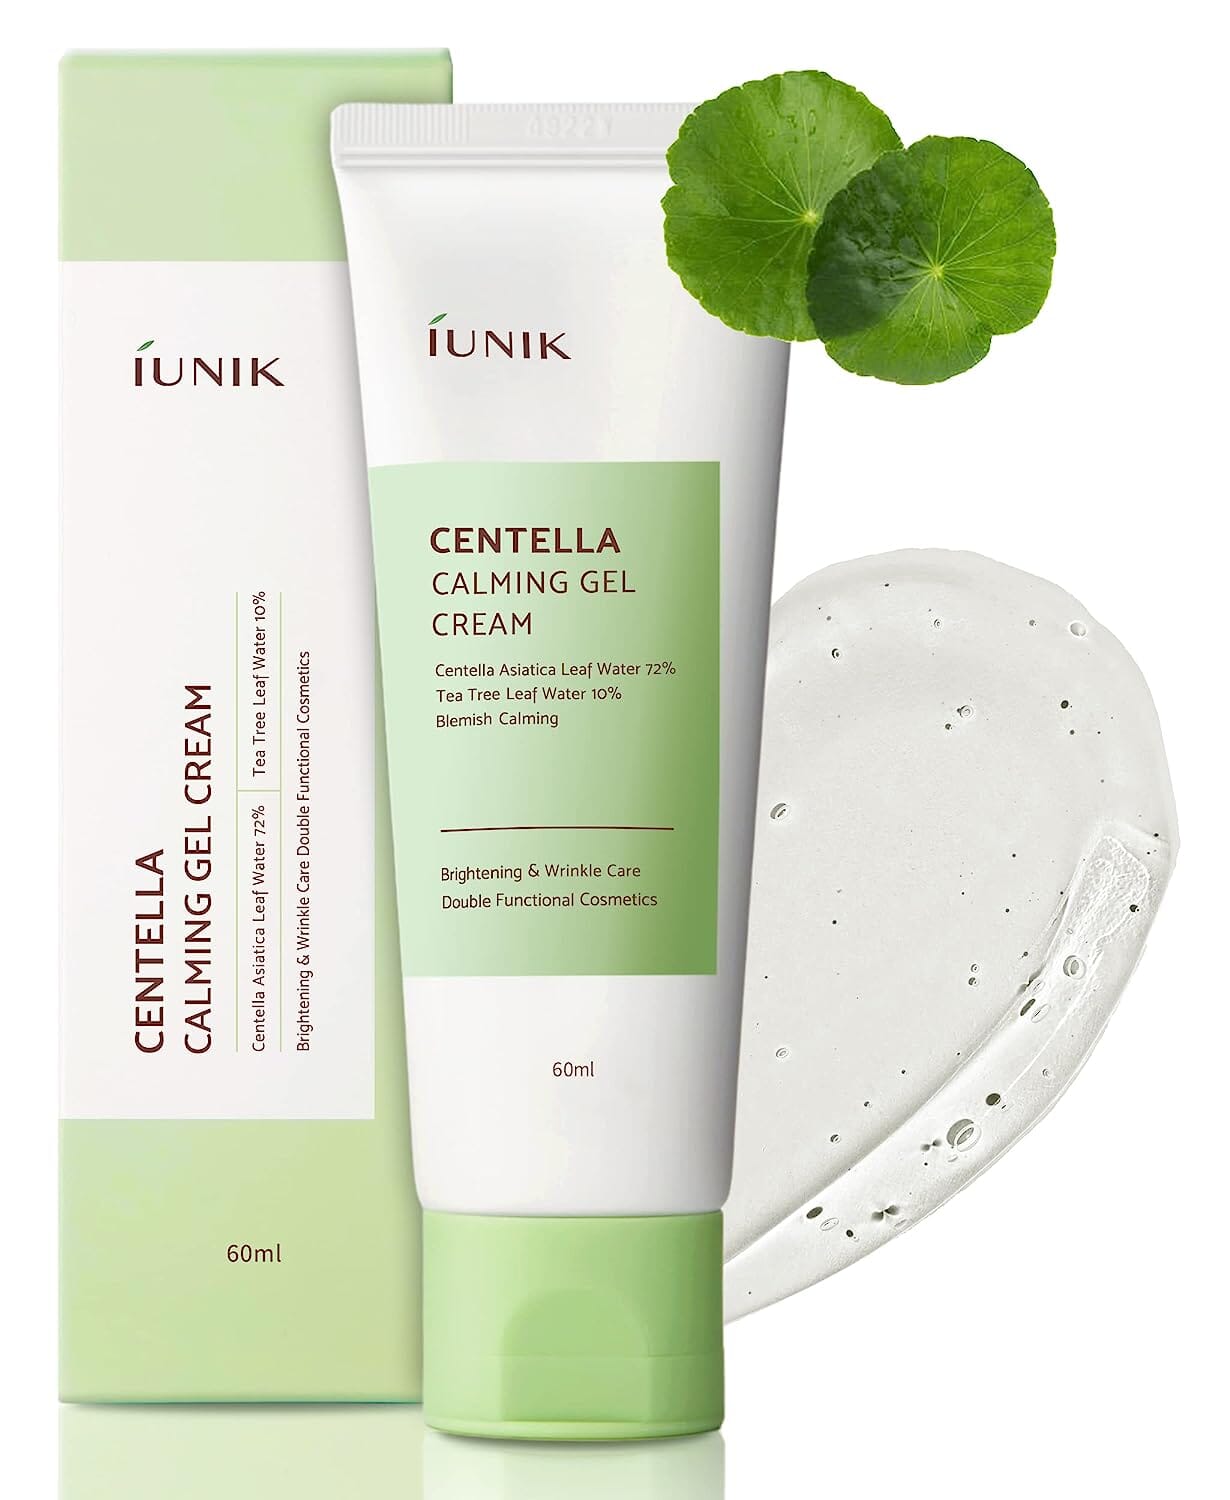 iUNIK Centella Calming Gel Cream 60ml Skin Care iUNIK ORION XO Sri Lanka